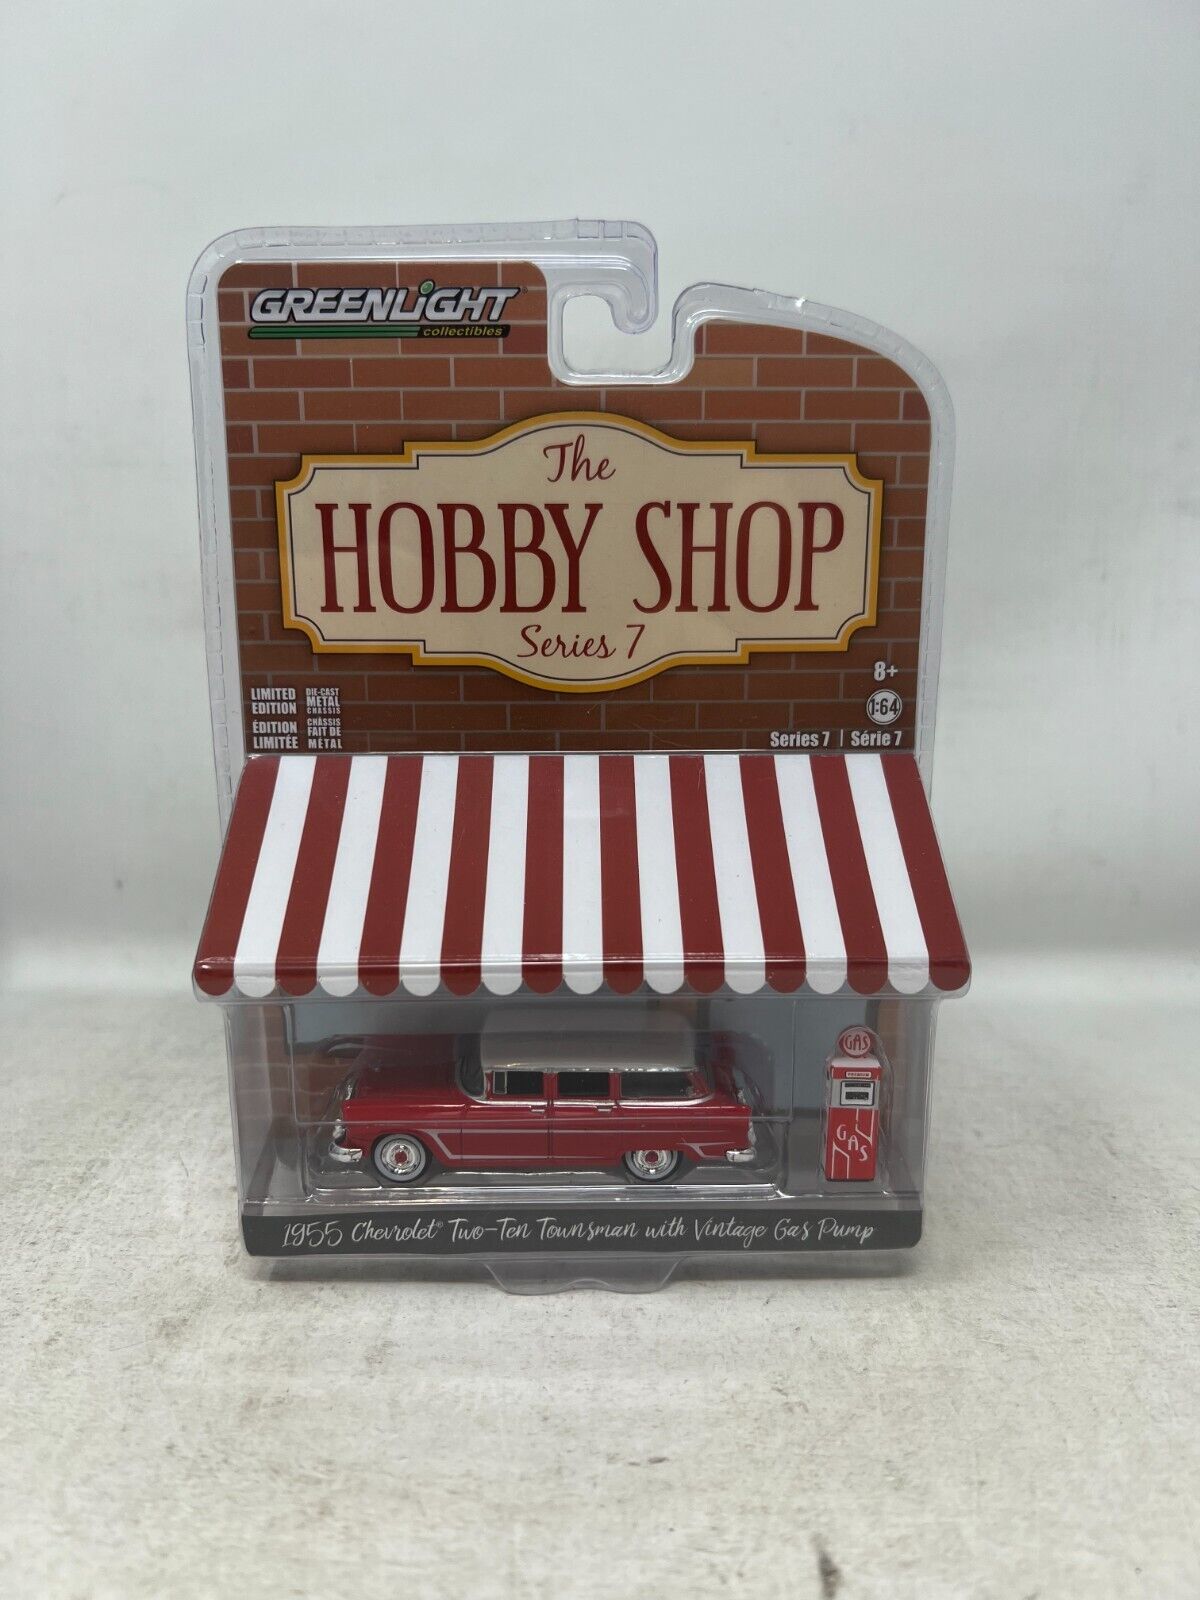 Greenlight The Hobby Shop Series 7 1955 Chevrolet Two-Ten Townsman 1:64 Diecast